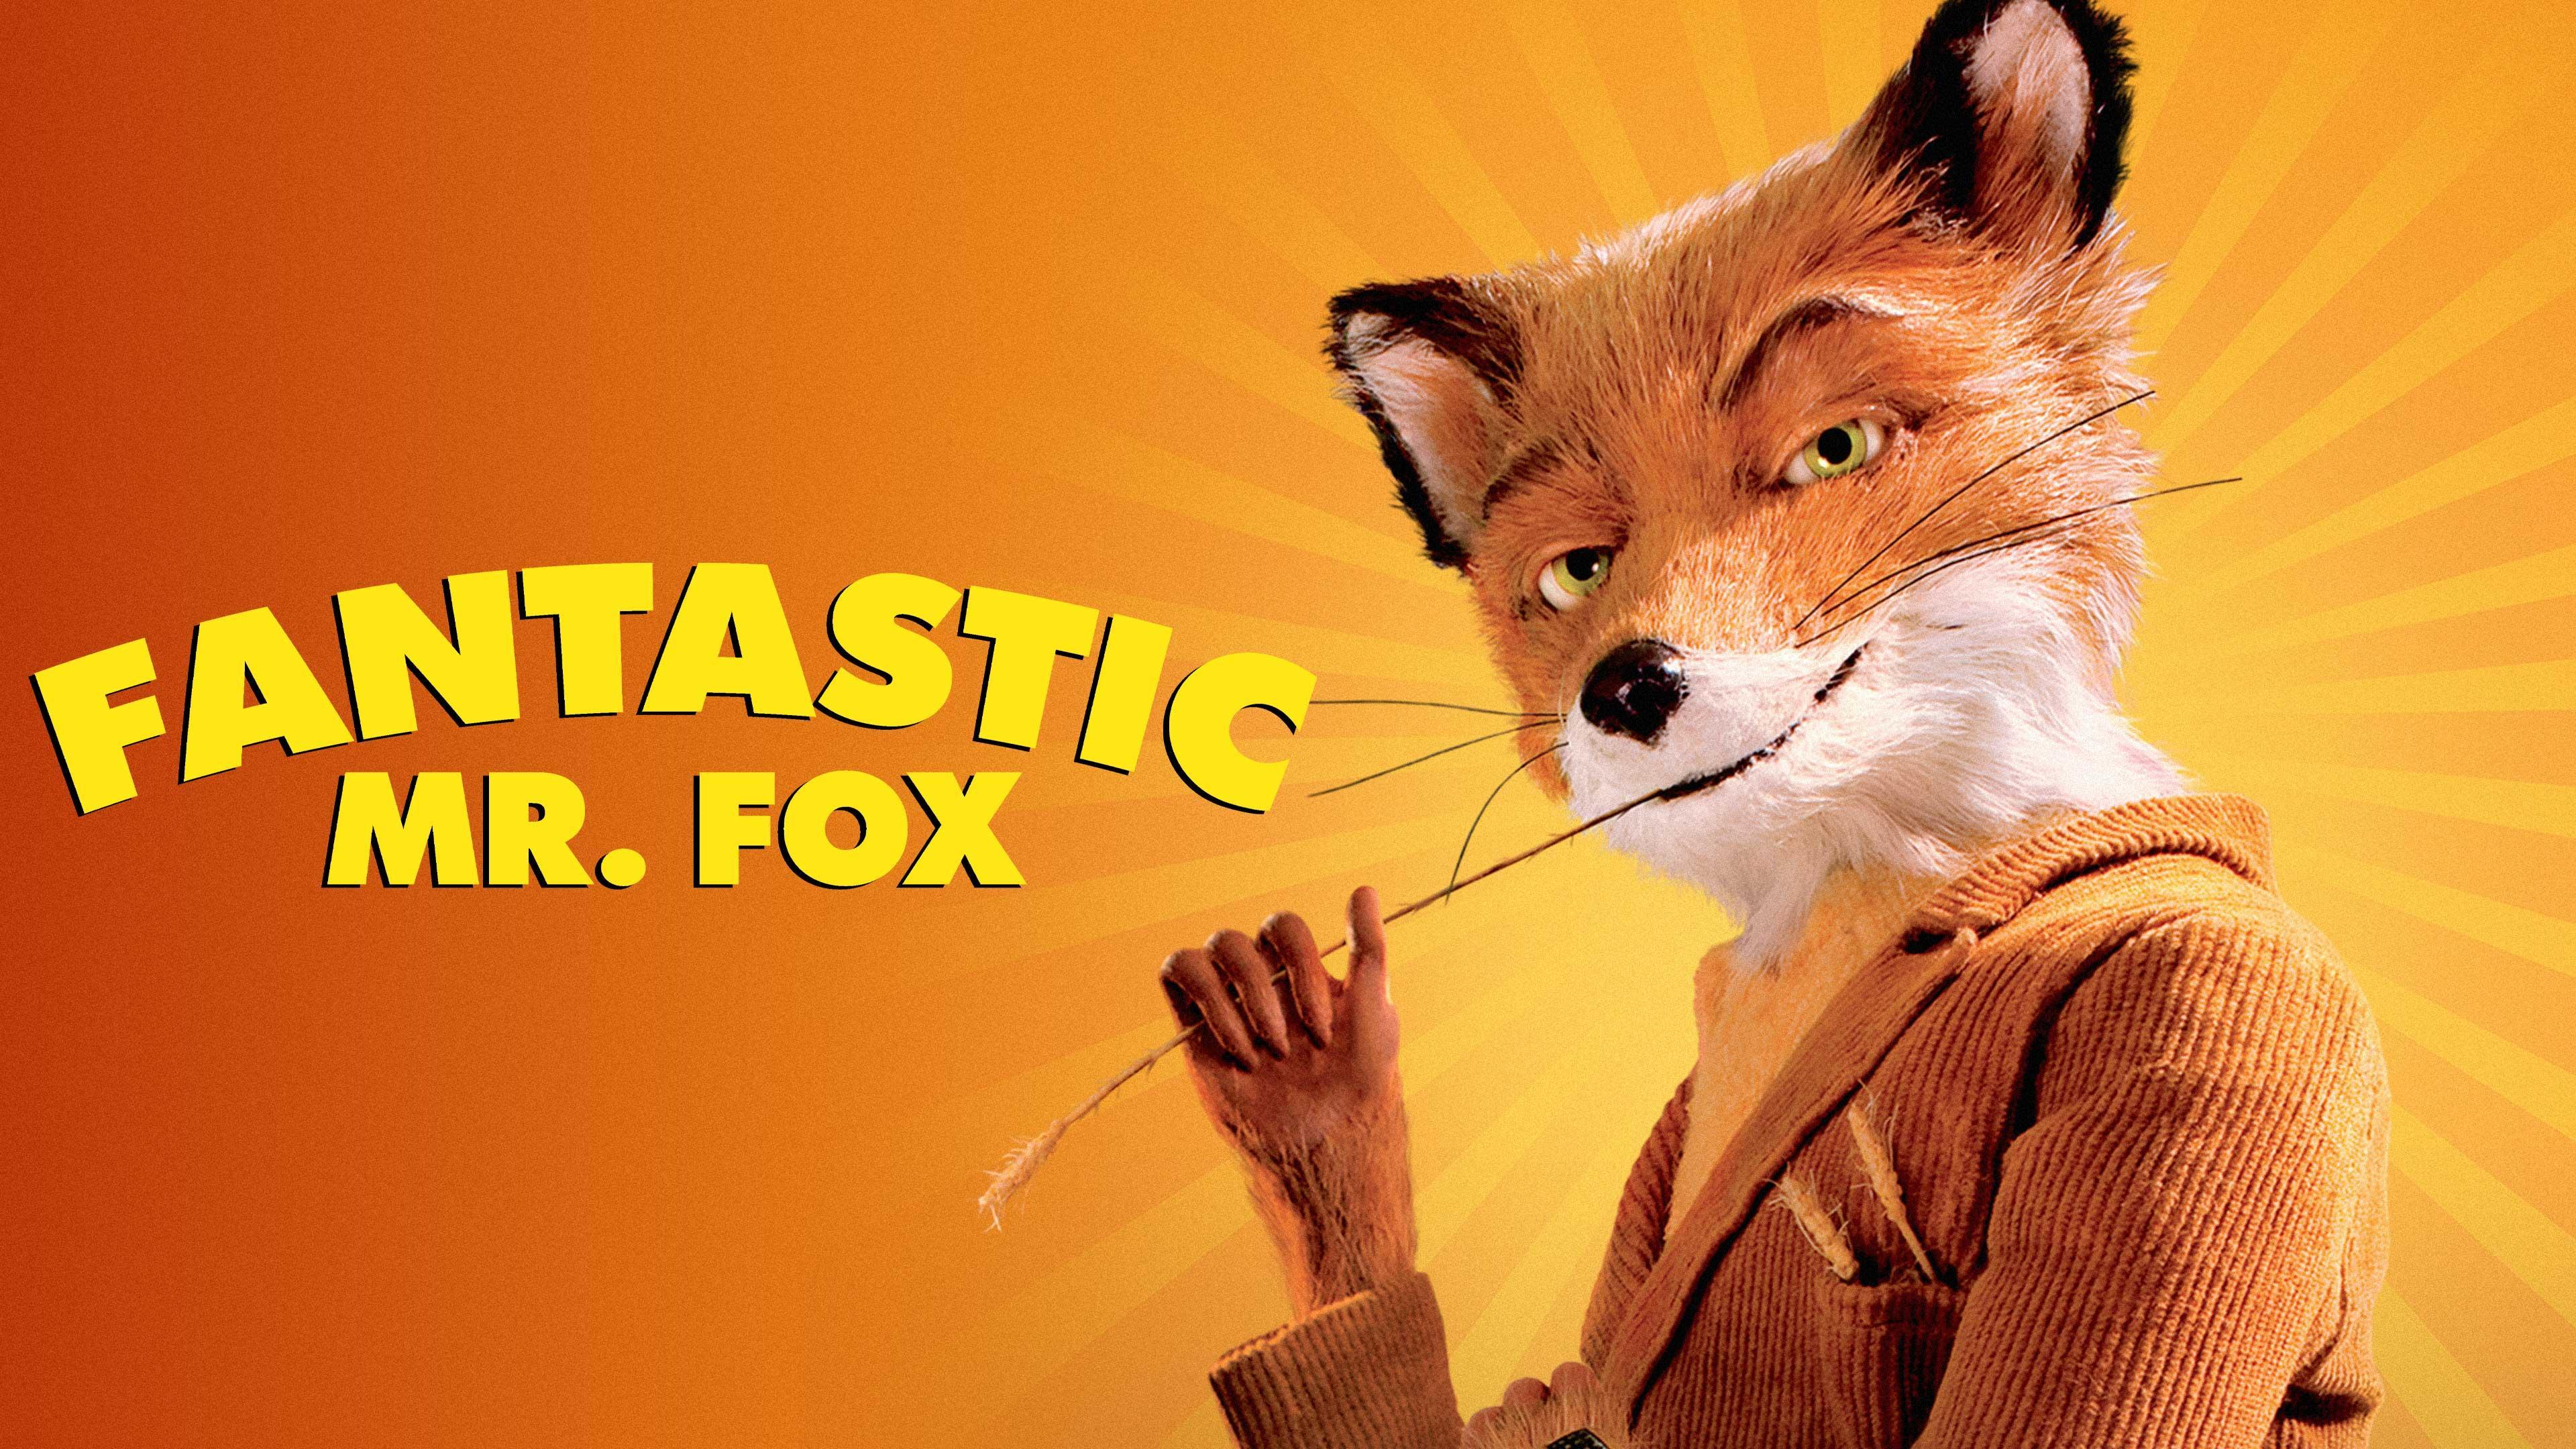 Mister fox. Бесподобный Мистер Фокс. Бесподобный Мистер Фокс 2009. Уэс Андерсон бесподобный Мистер Фокс.